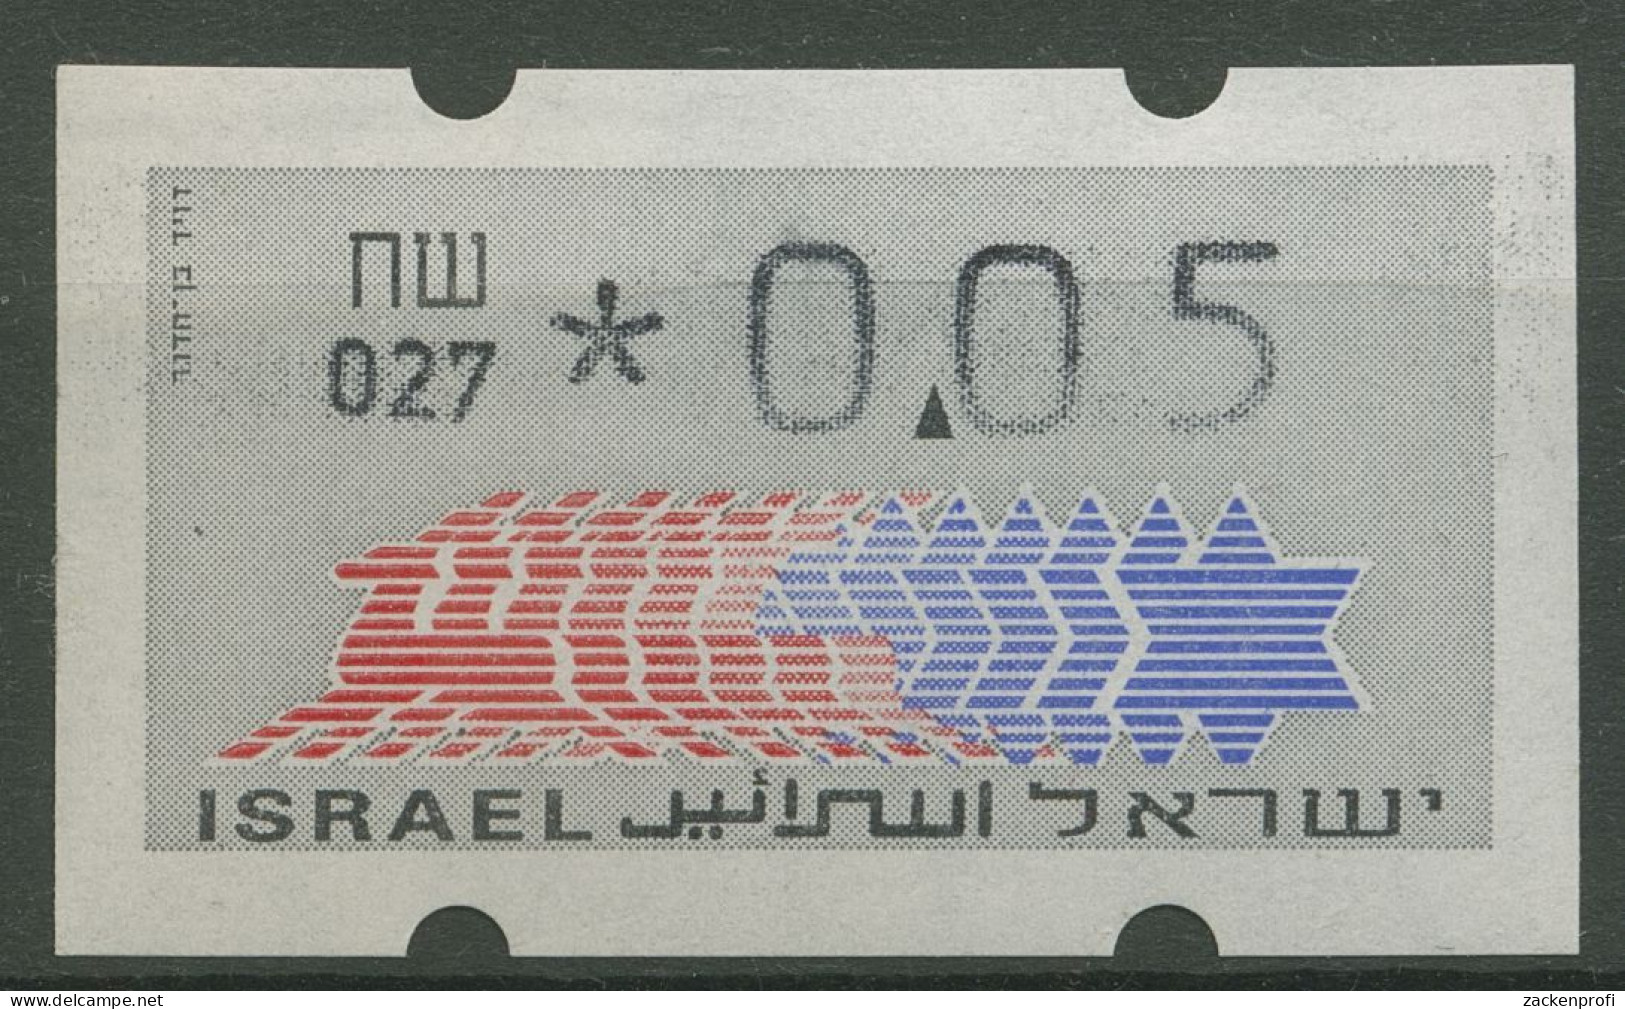 Israel ATM 1990 Hirsch Automat 027 Einzelwert ATM 3.3.27 Postfrisch - Automatenmarken (Frama)